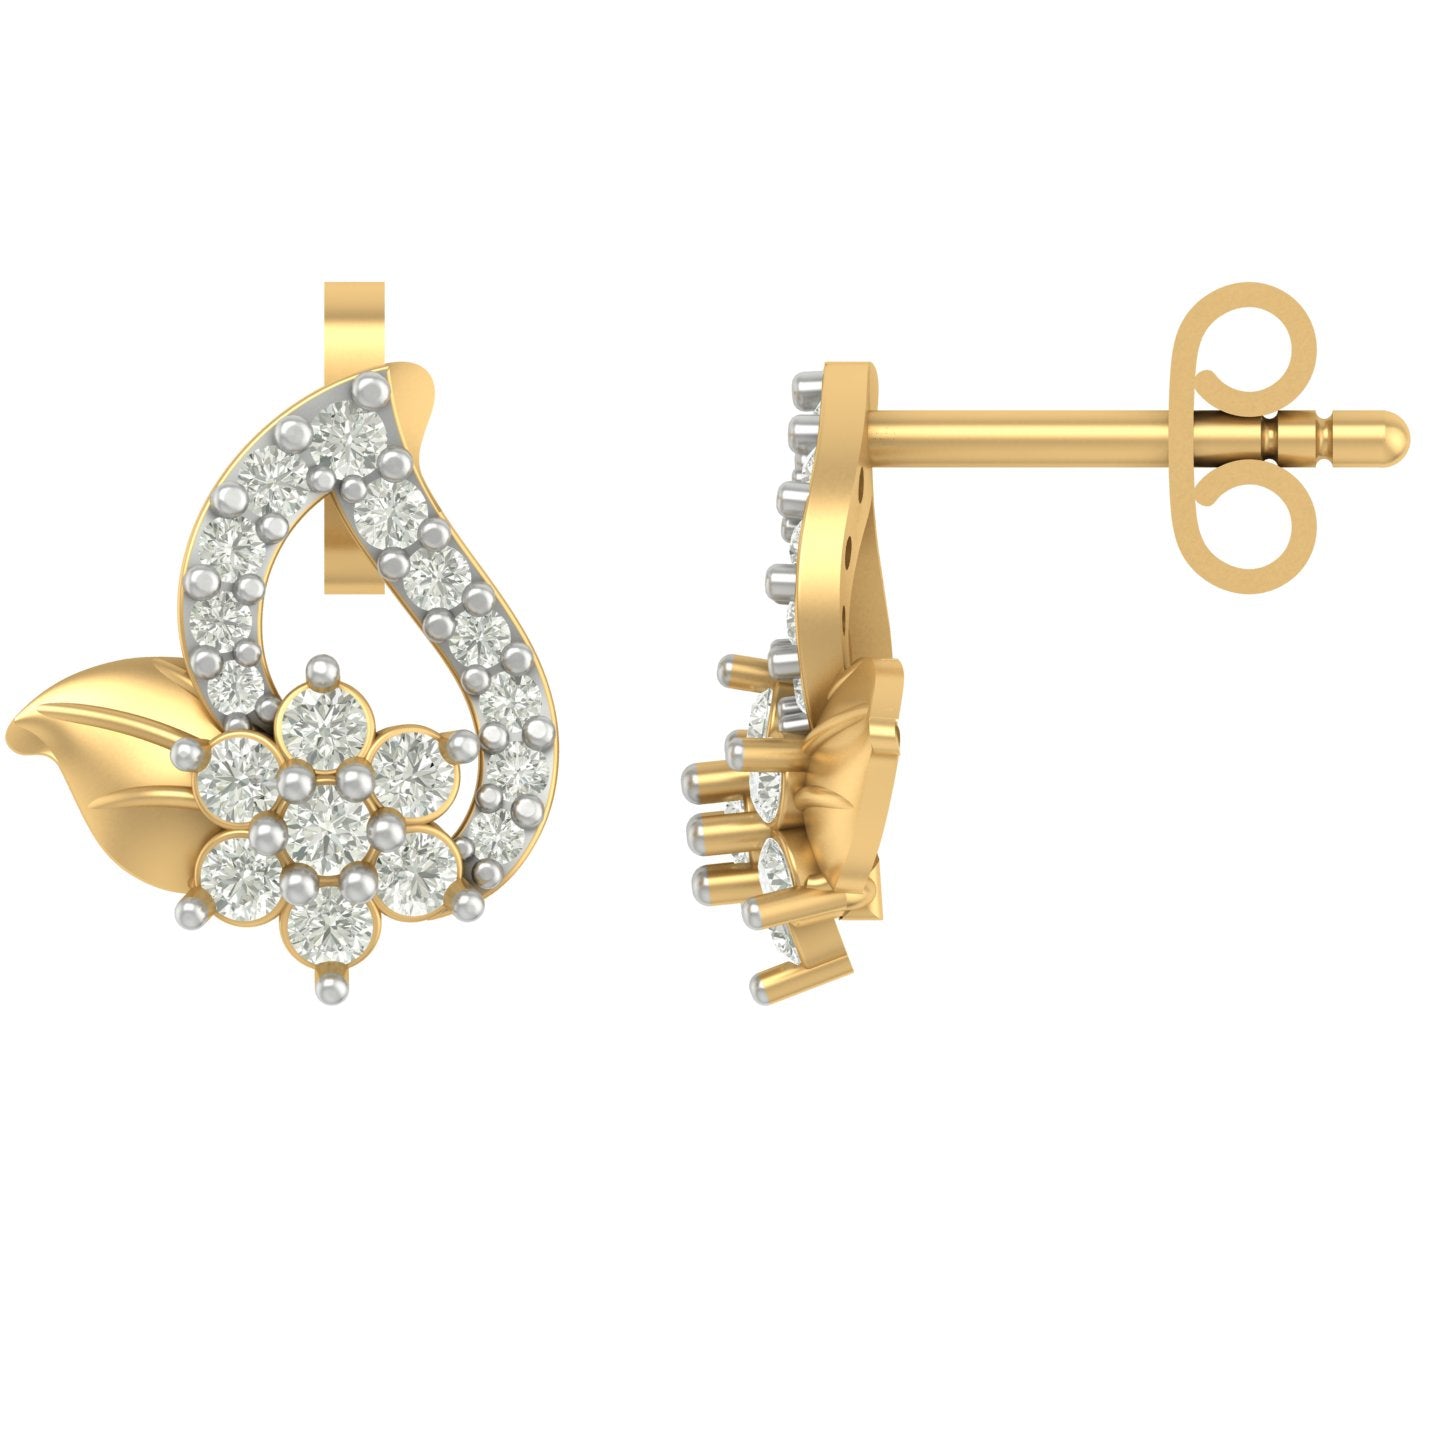 Dazz modern lab diamond earrings design